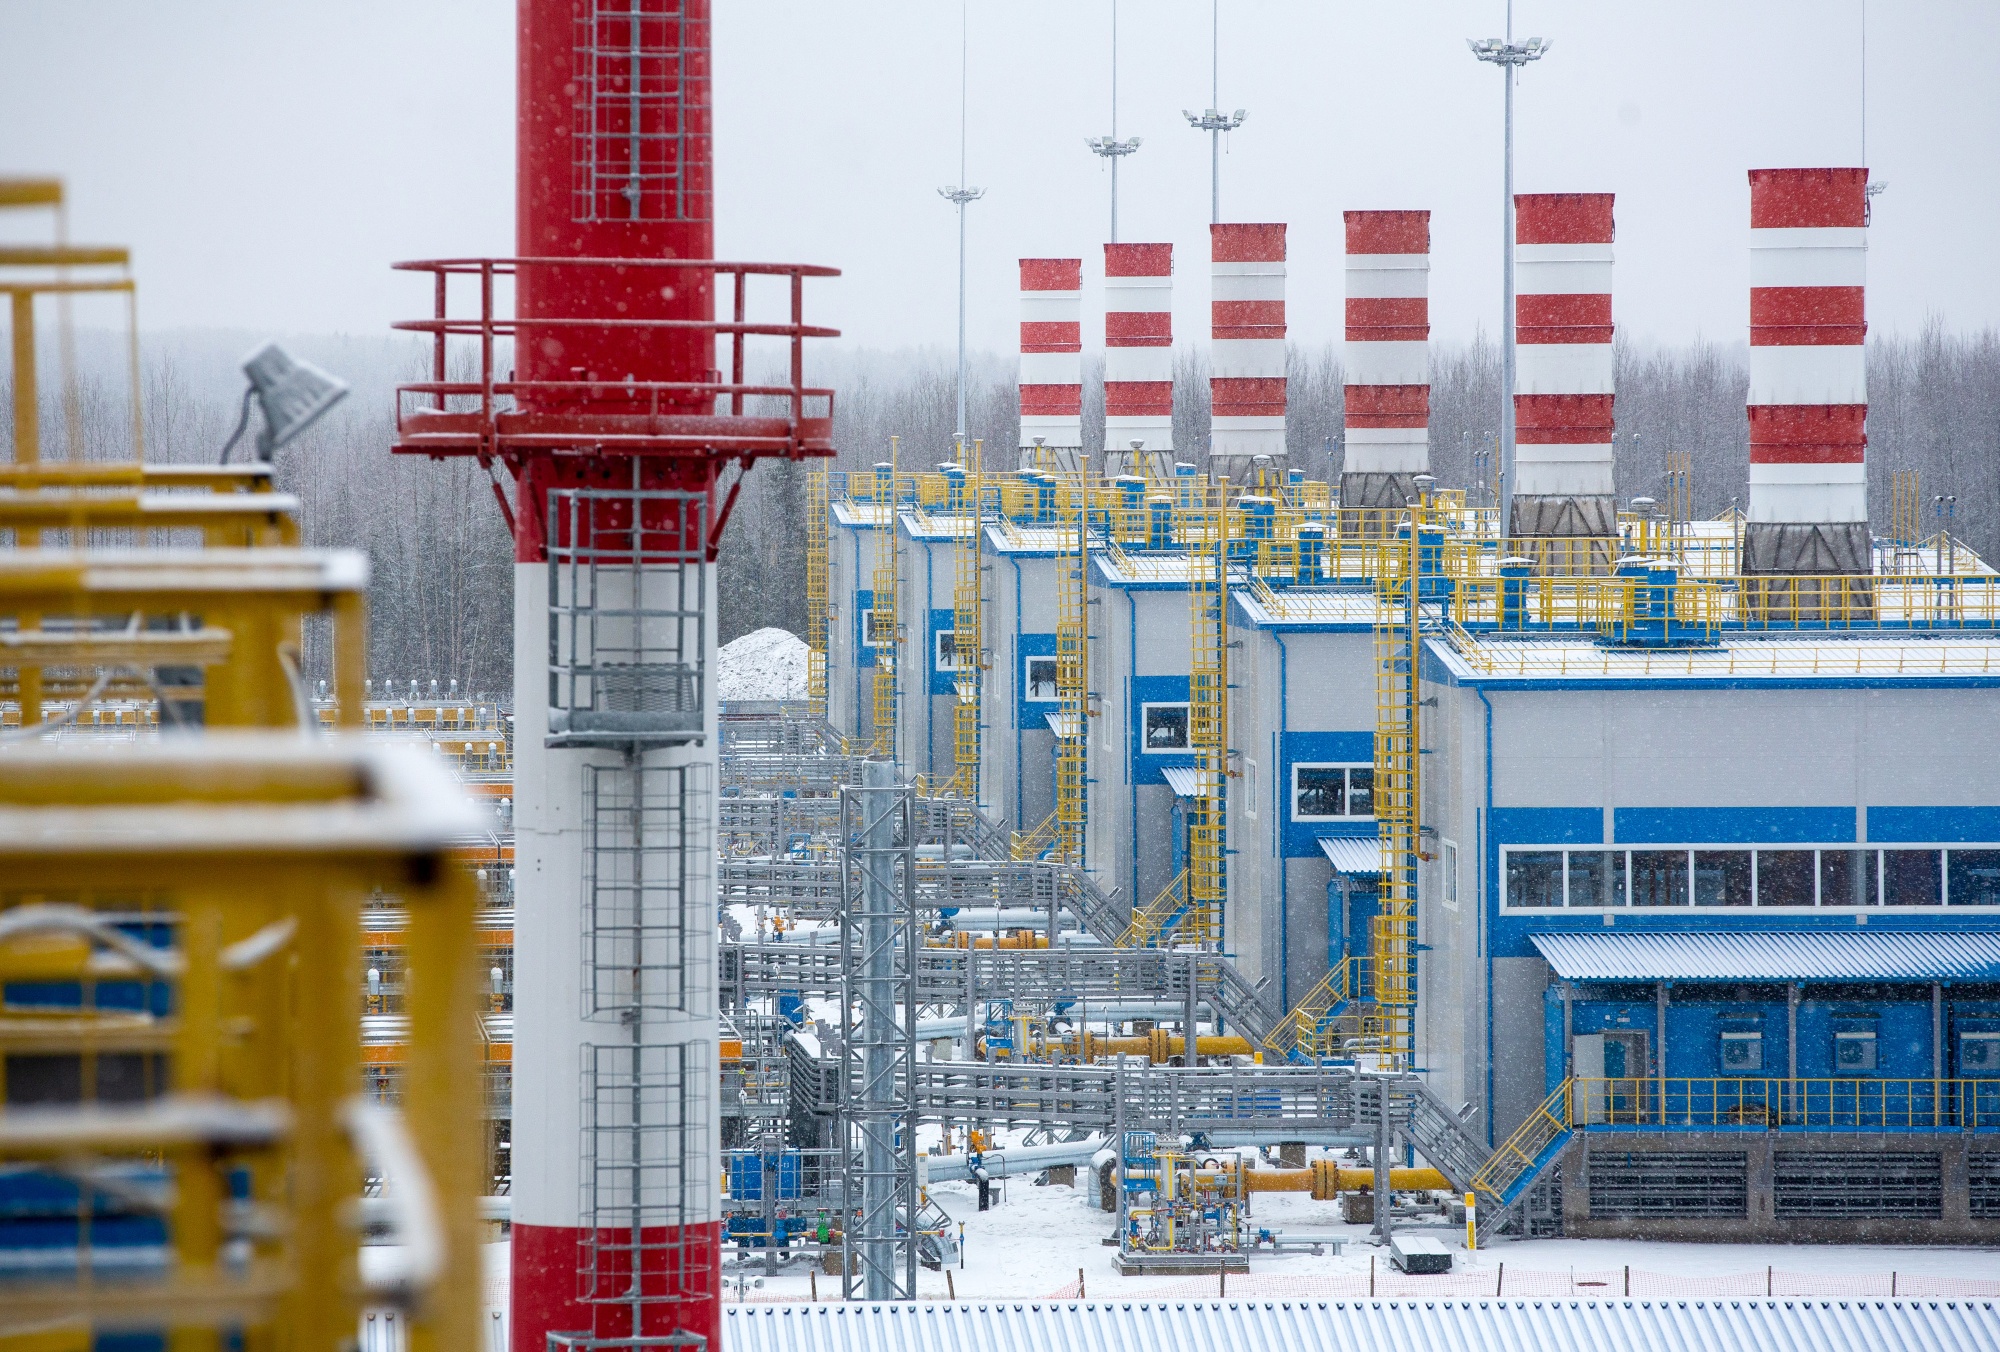 Gazprom’s Slavyanskaya compressor station, the starting point of the Nord Stream 2 gas pipeline, in Ust-Luga, Russia.